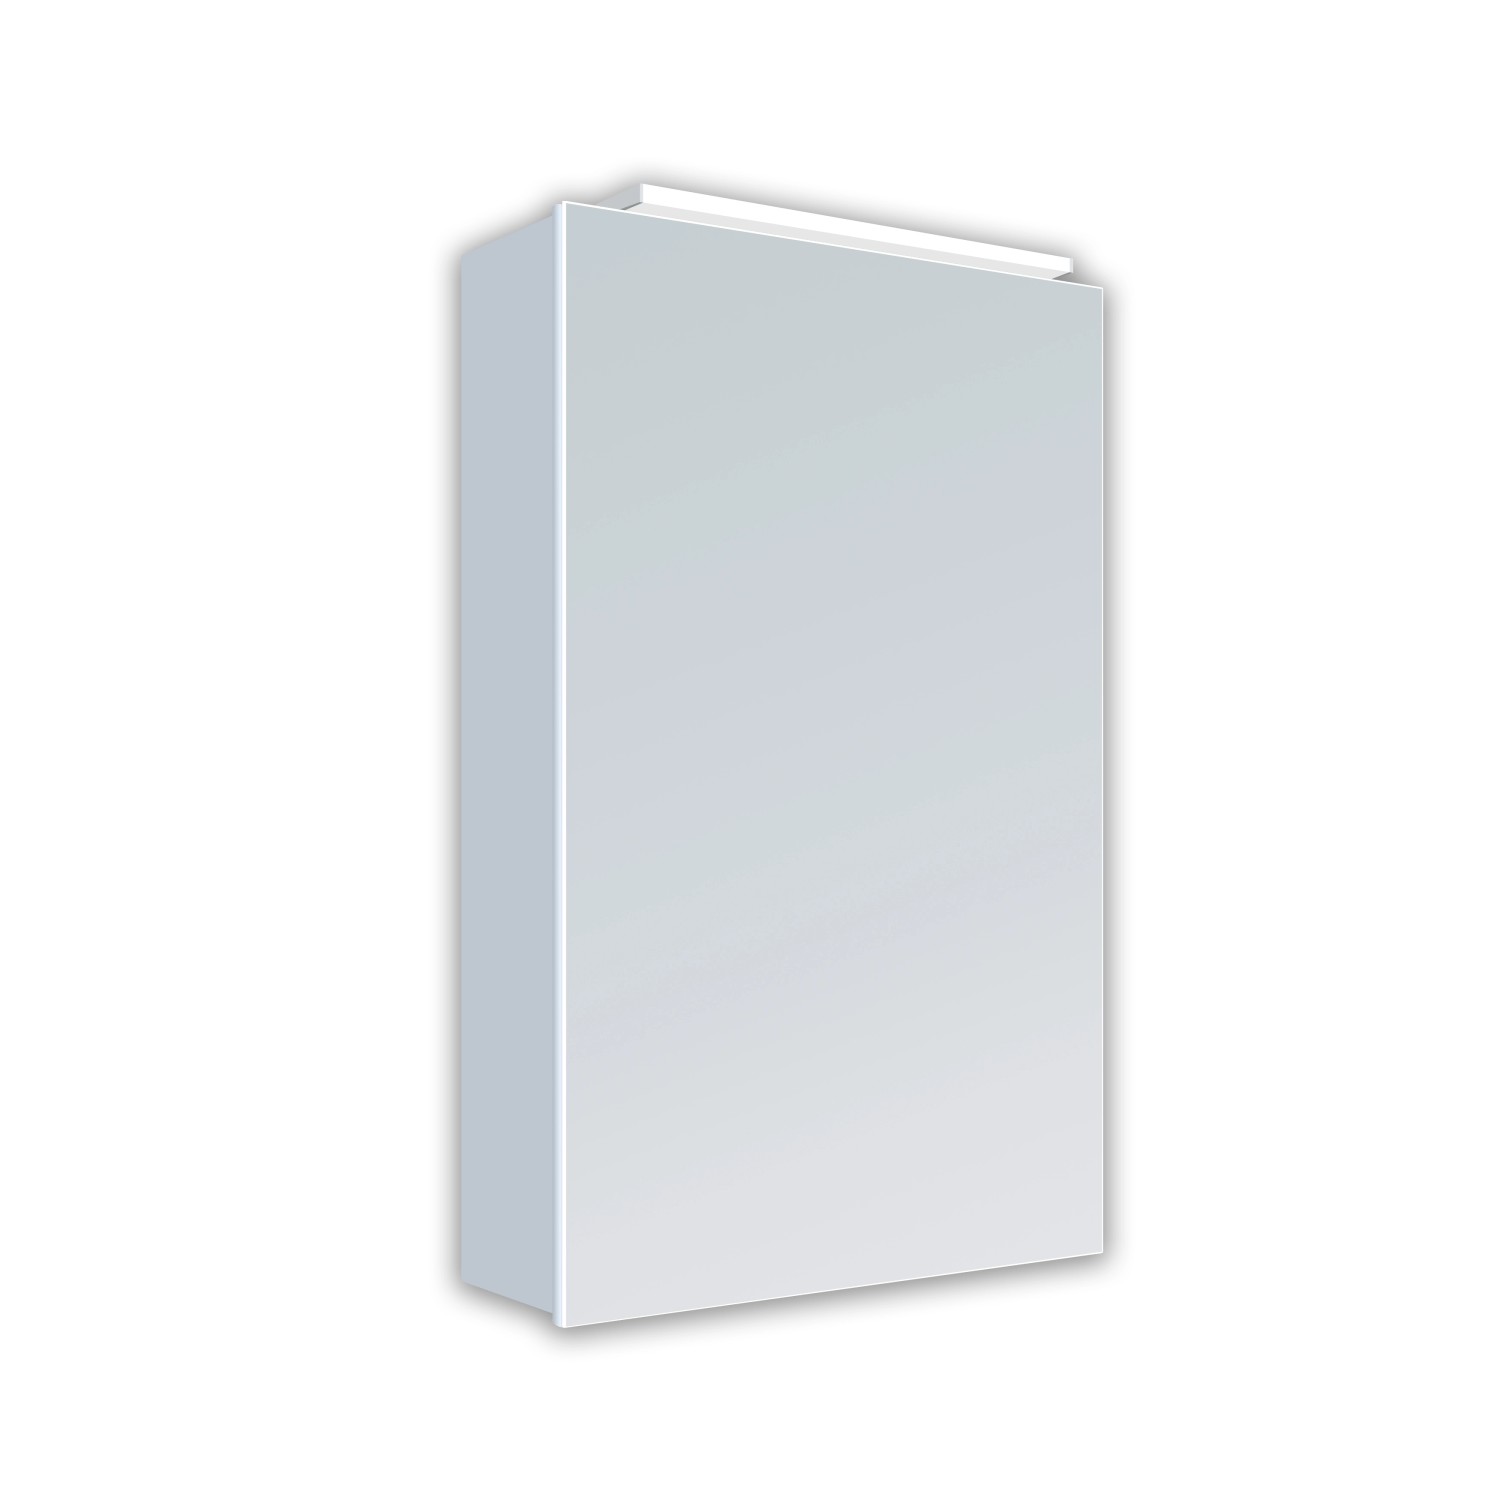 Alufarben Aluminio 40 OBI Spiegelschrank DSK kaufen bei cm Vegas